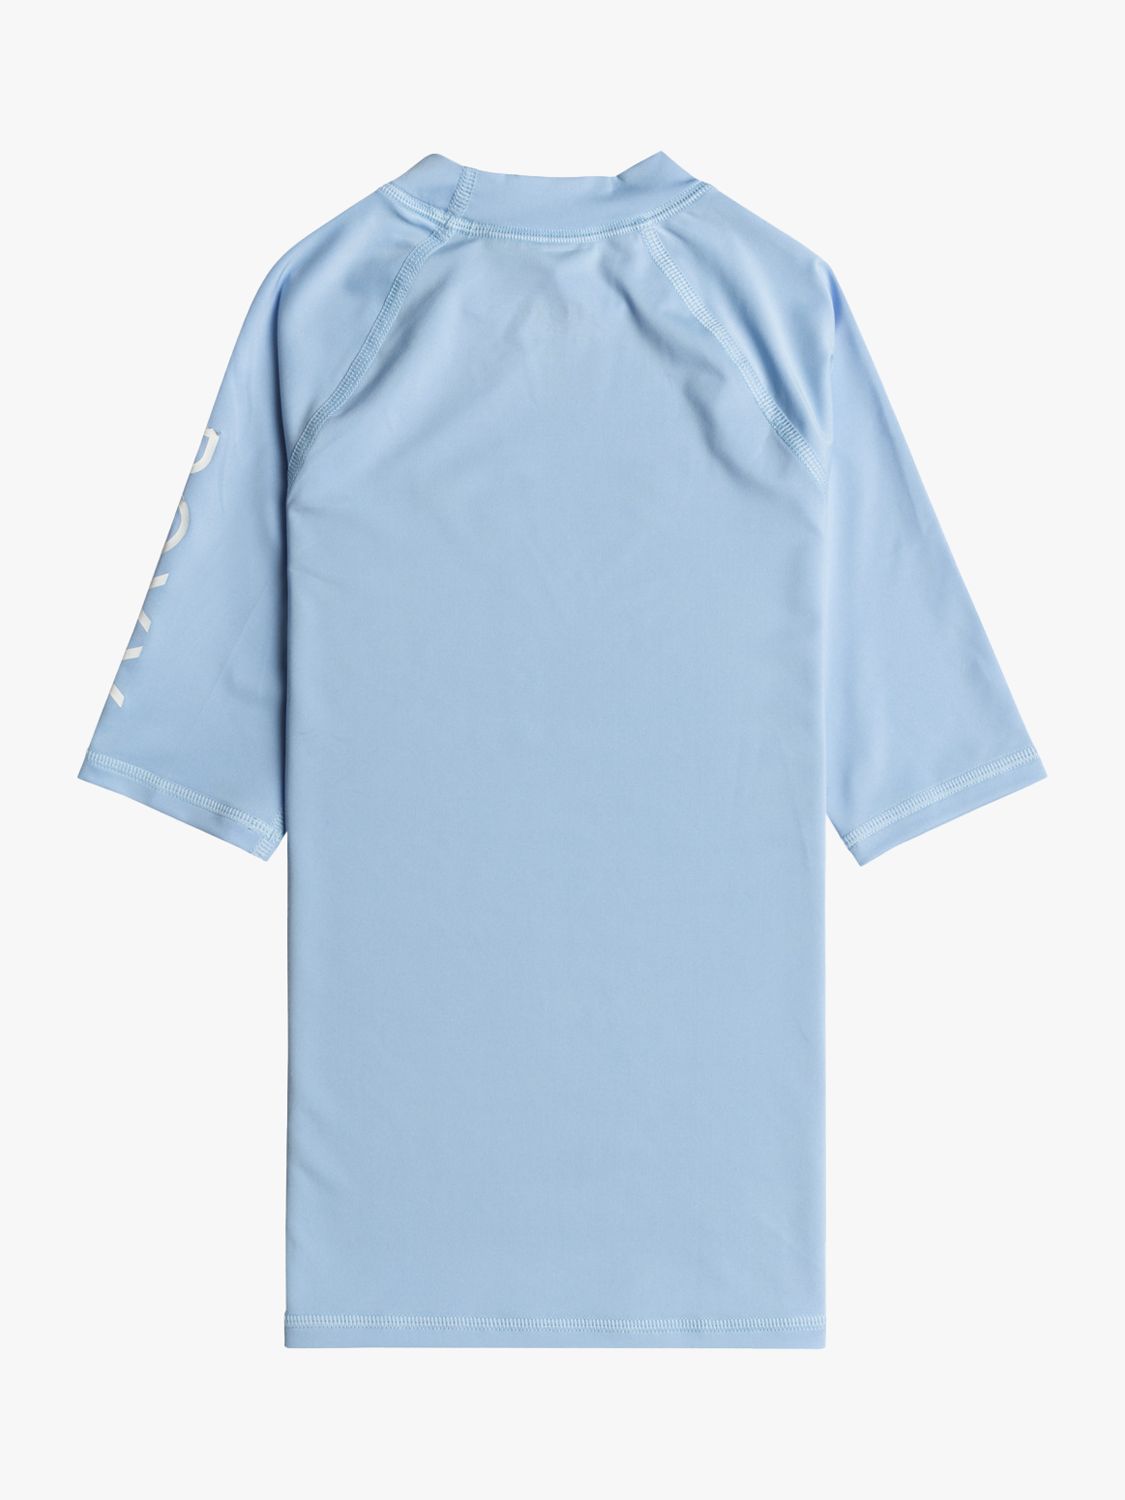 Roxy Kids' UPF 50 Short Sleeve Rash Vest, Air Blue, 8 years